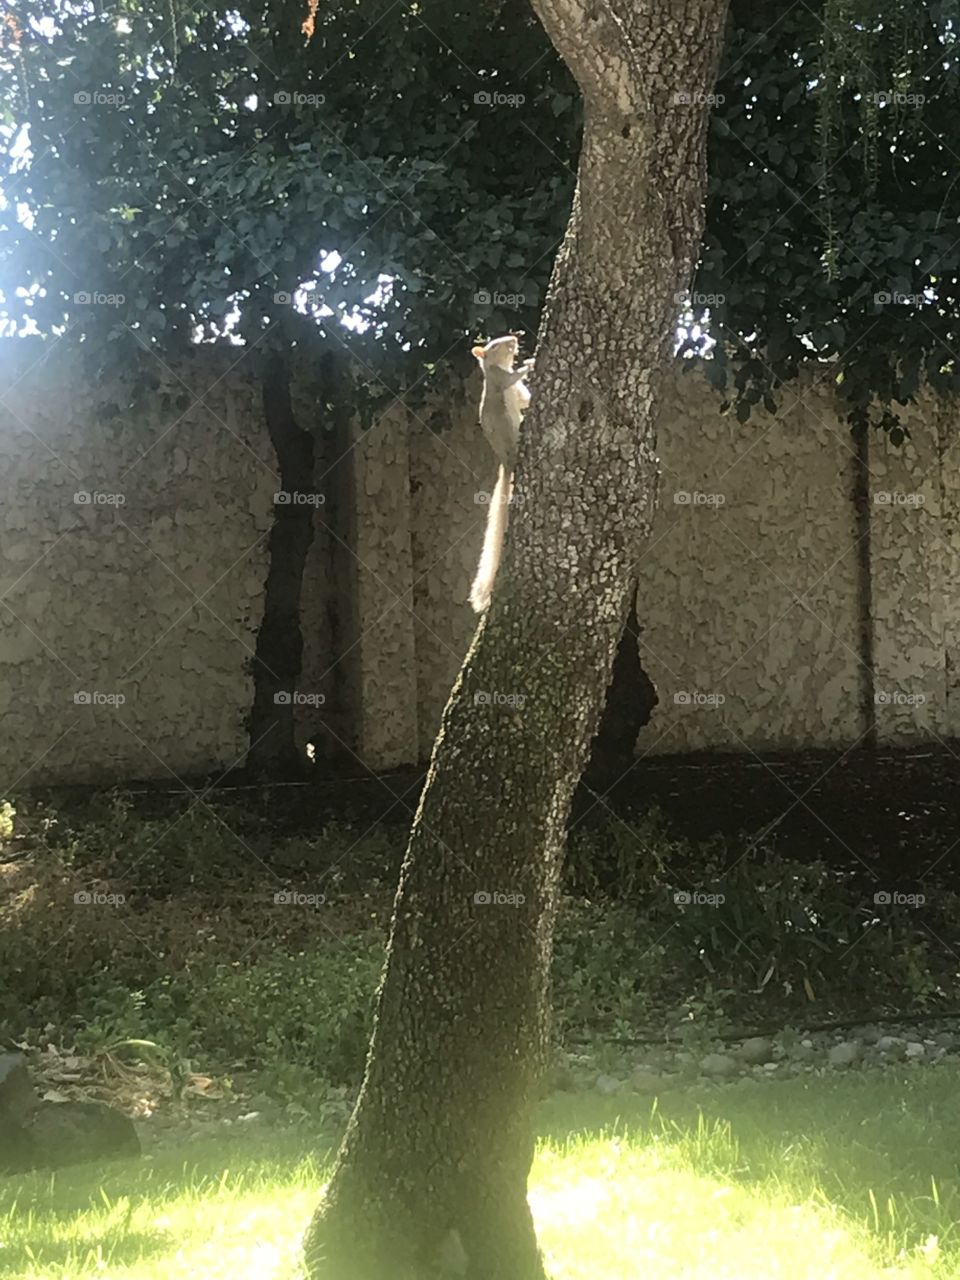 Posing squirrel